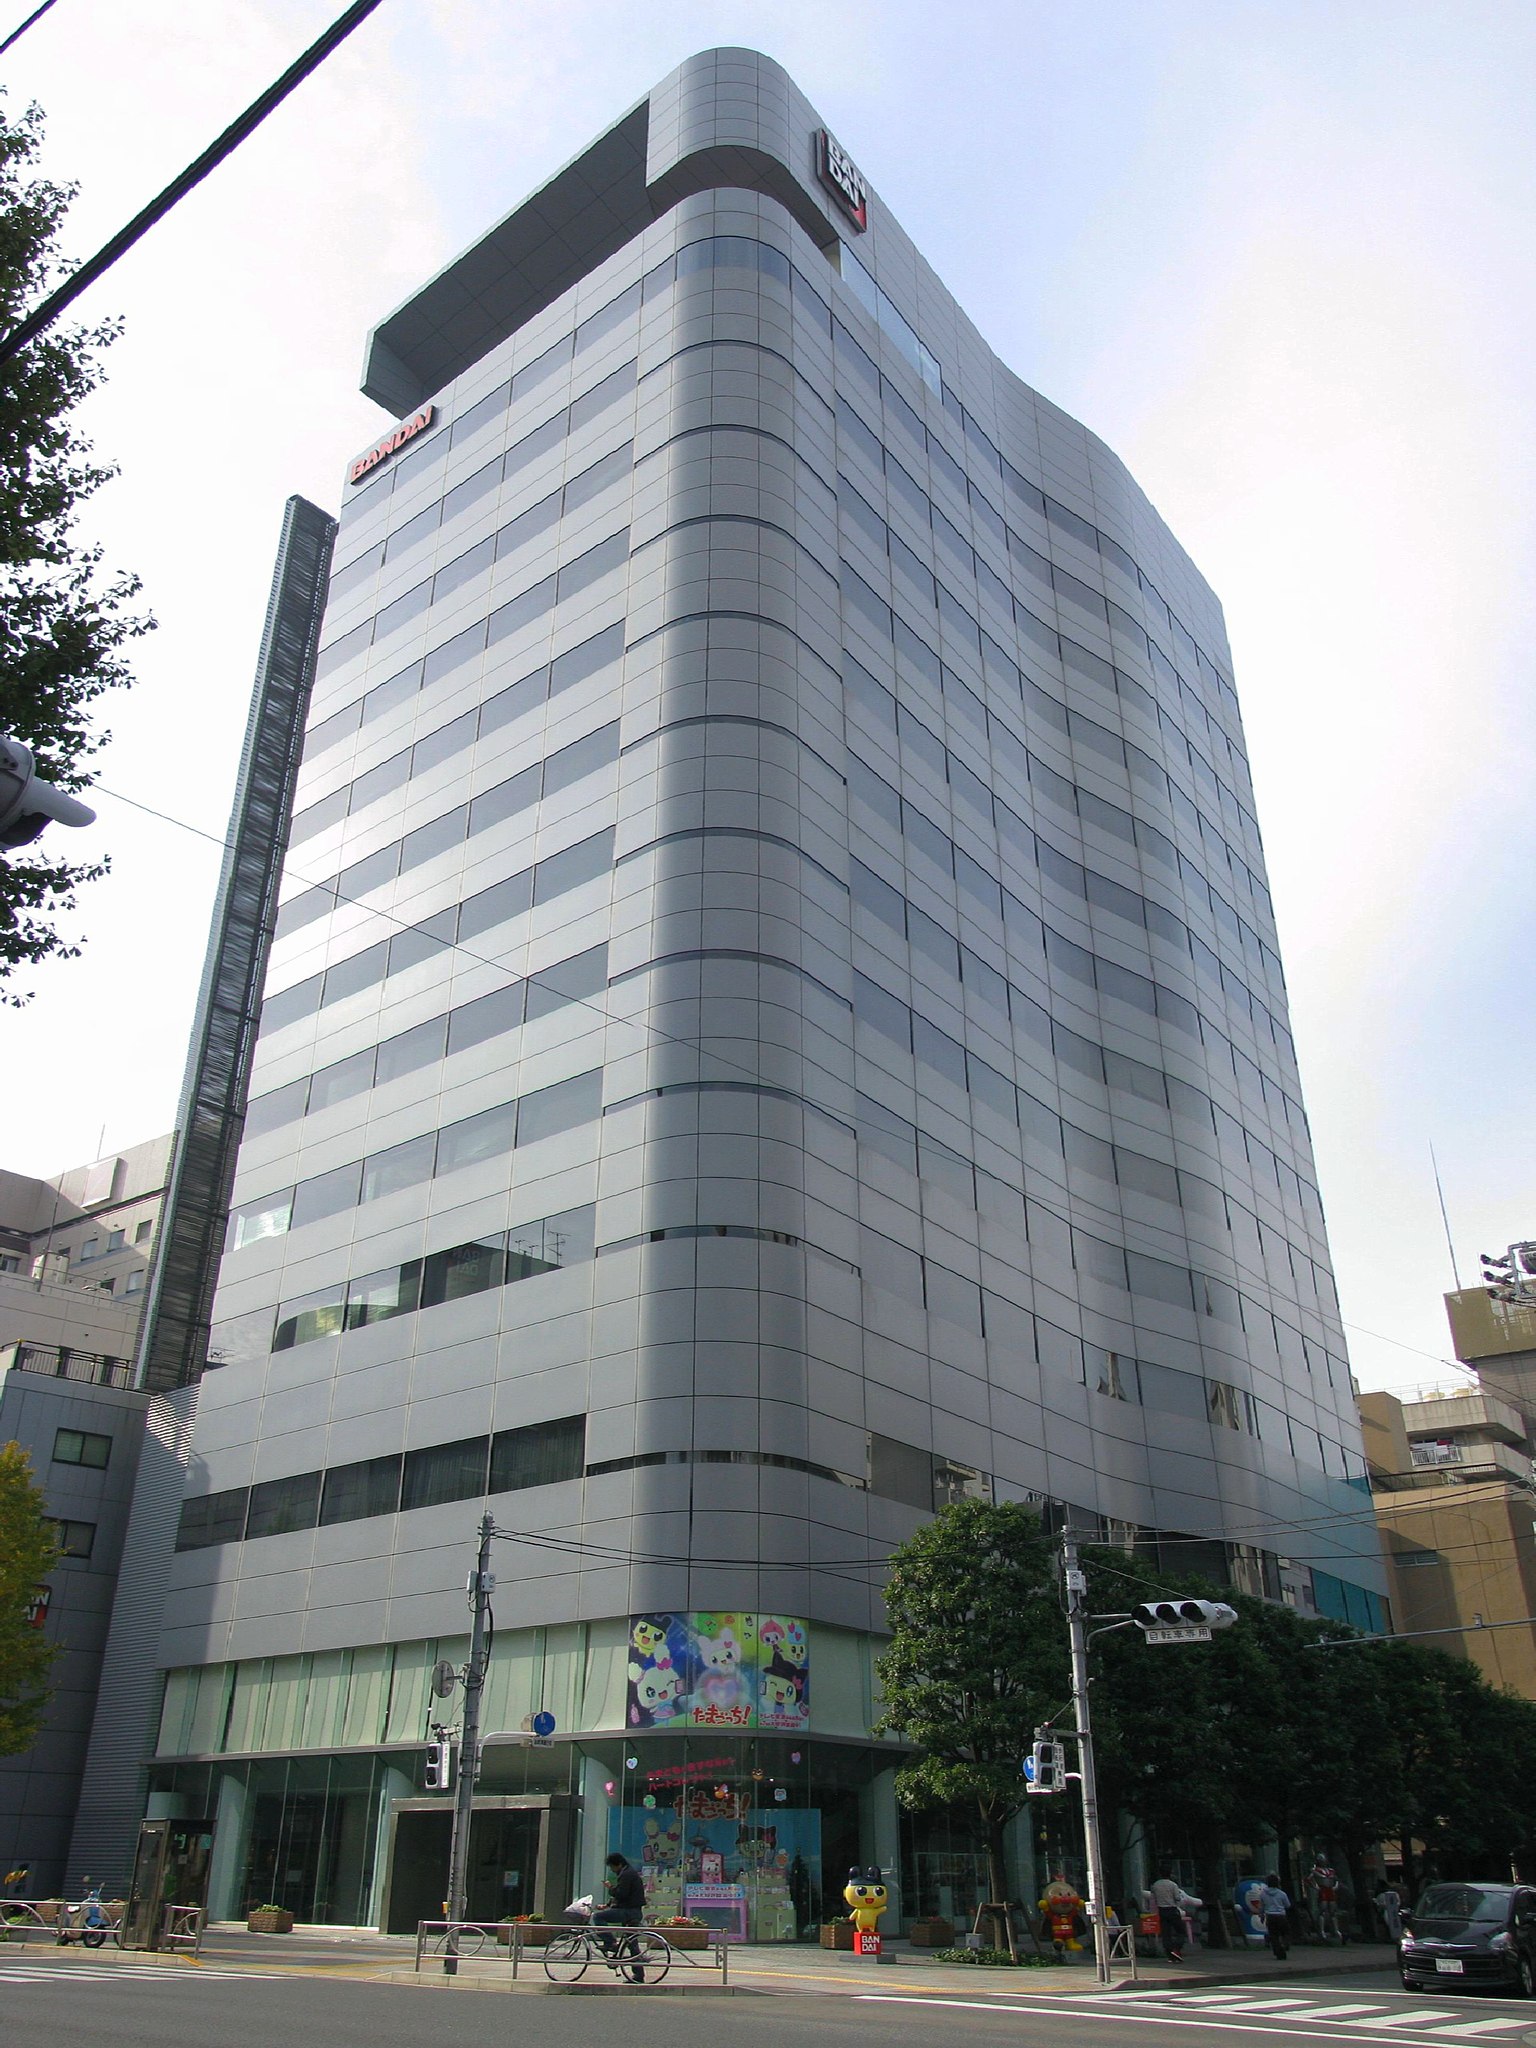 File:Bandai headquarters -01.jpg - Wikimedia Commons